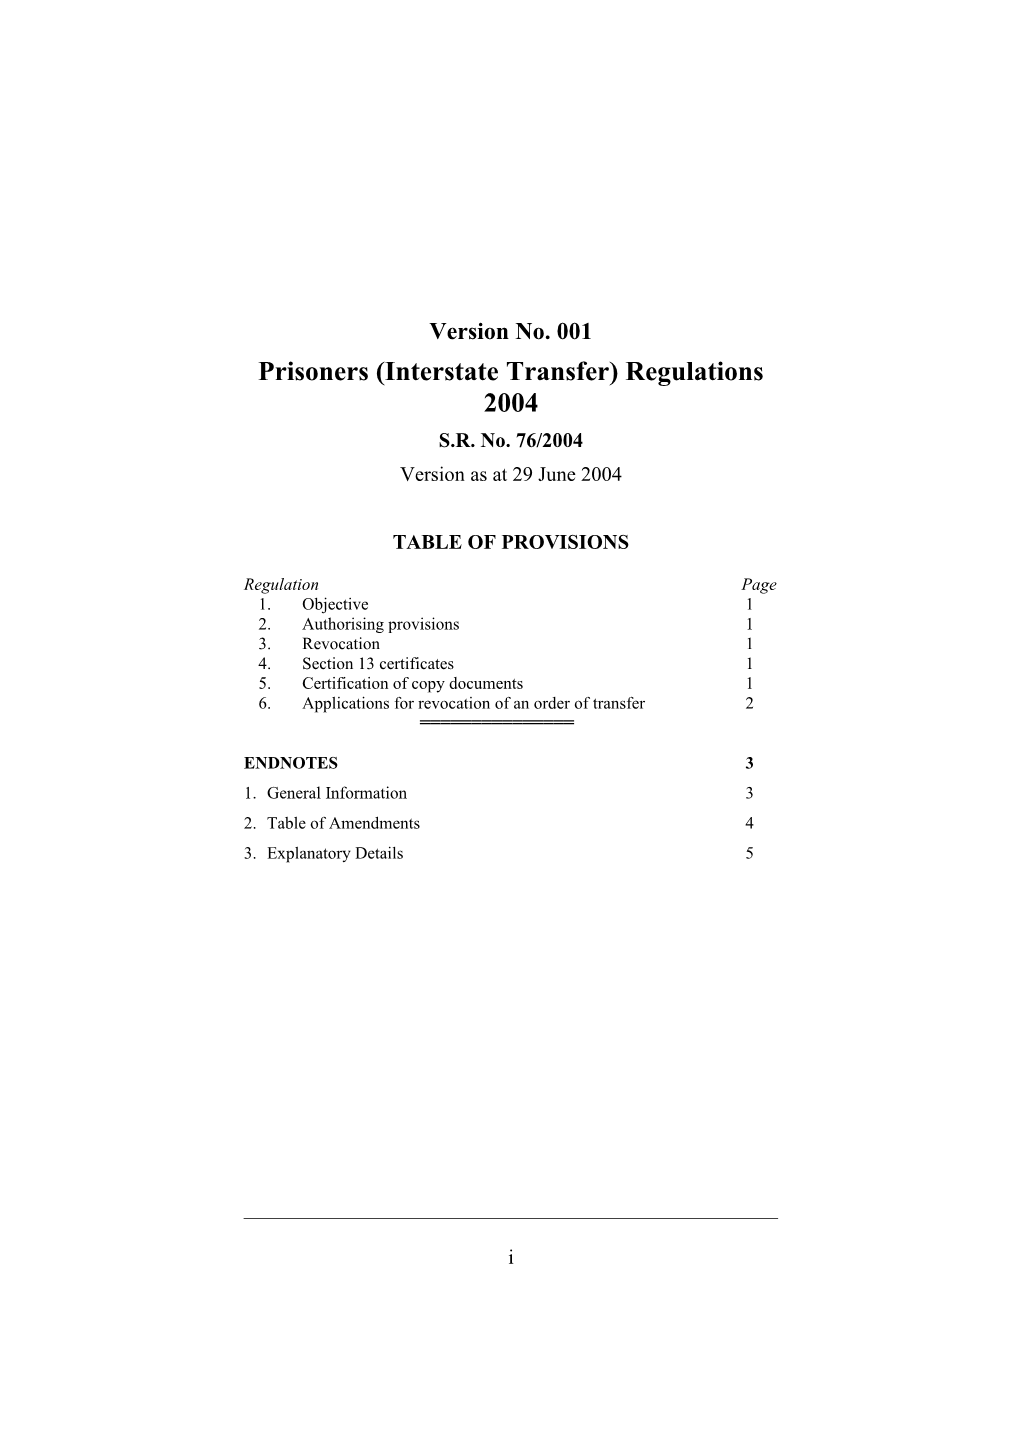 Prisoners (Interstate Transfer) Regulations 2004